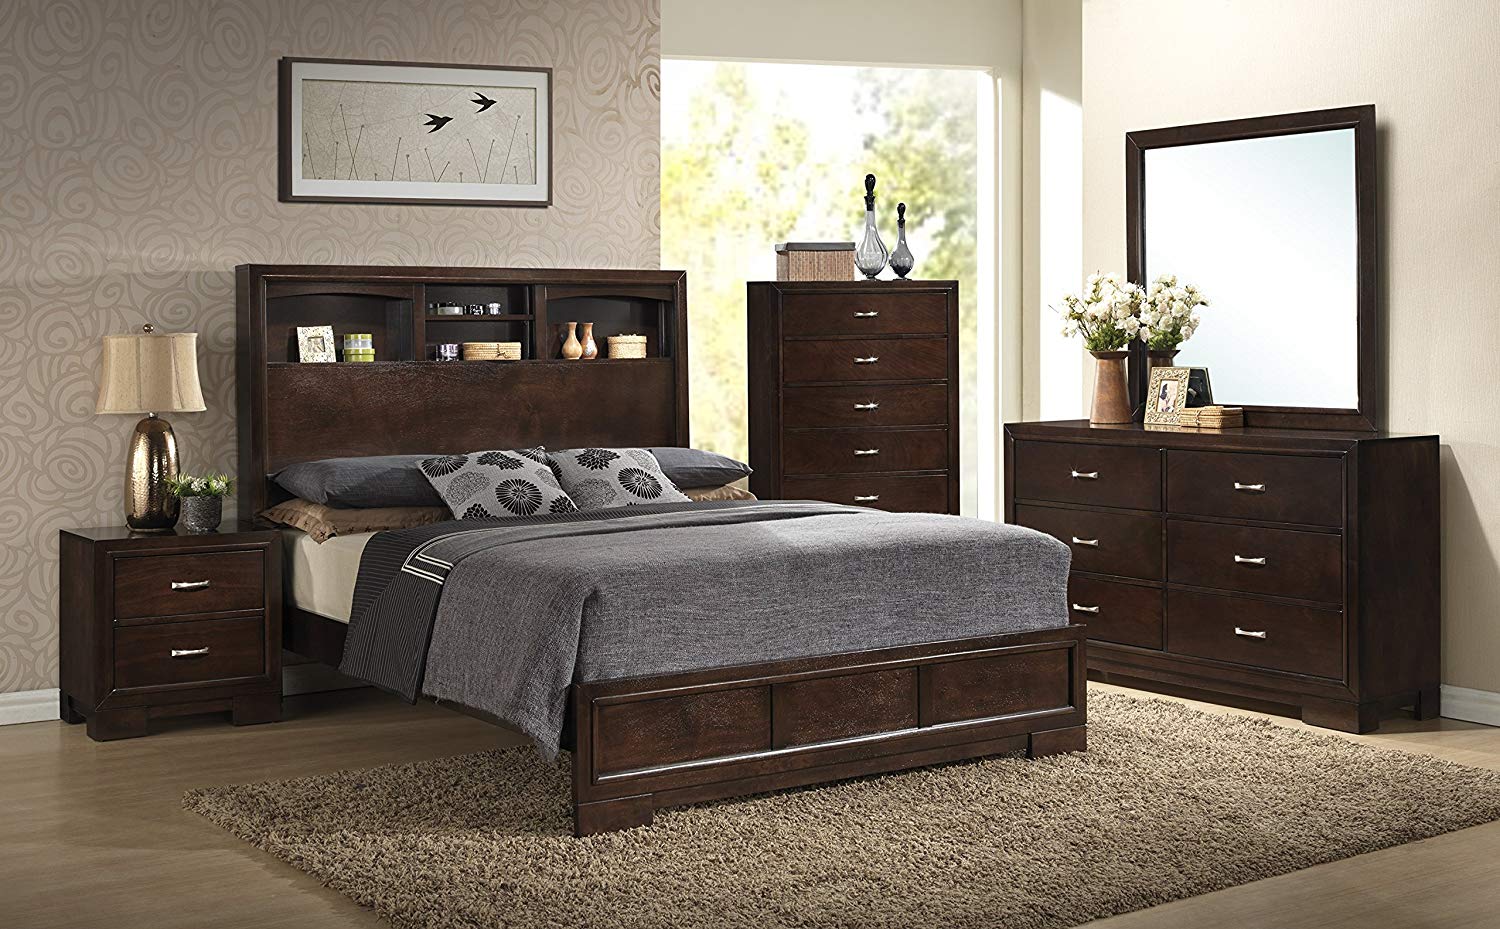 2 piece bedroom furniture set